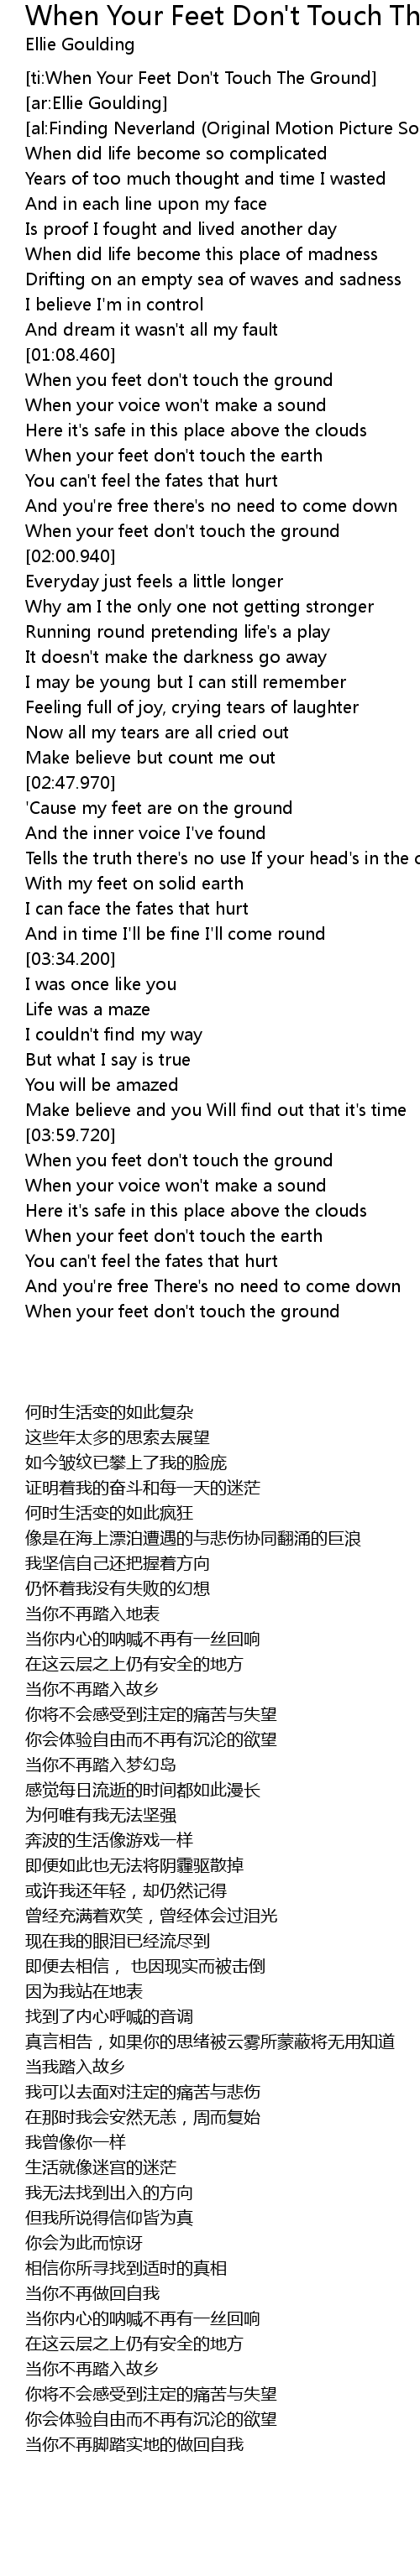 On the ground lyrics